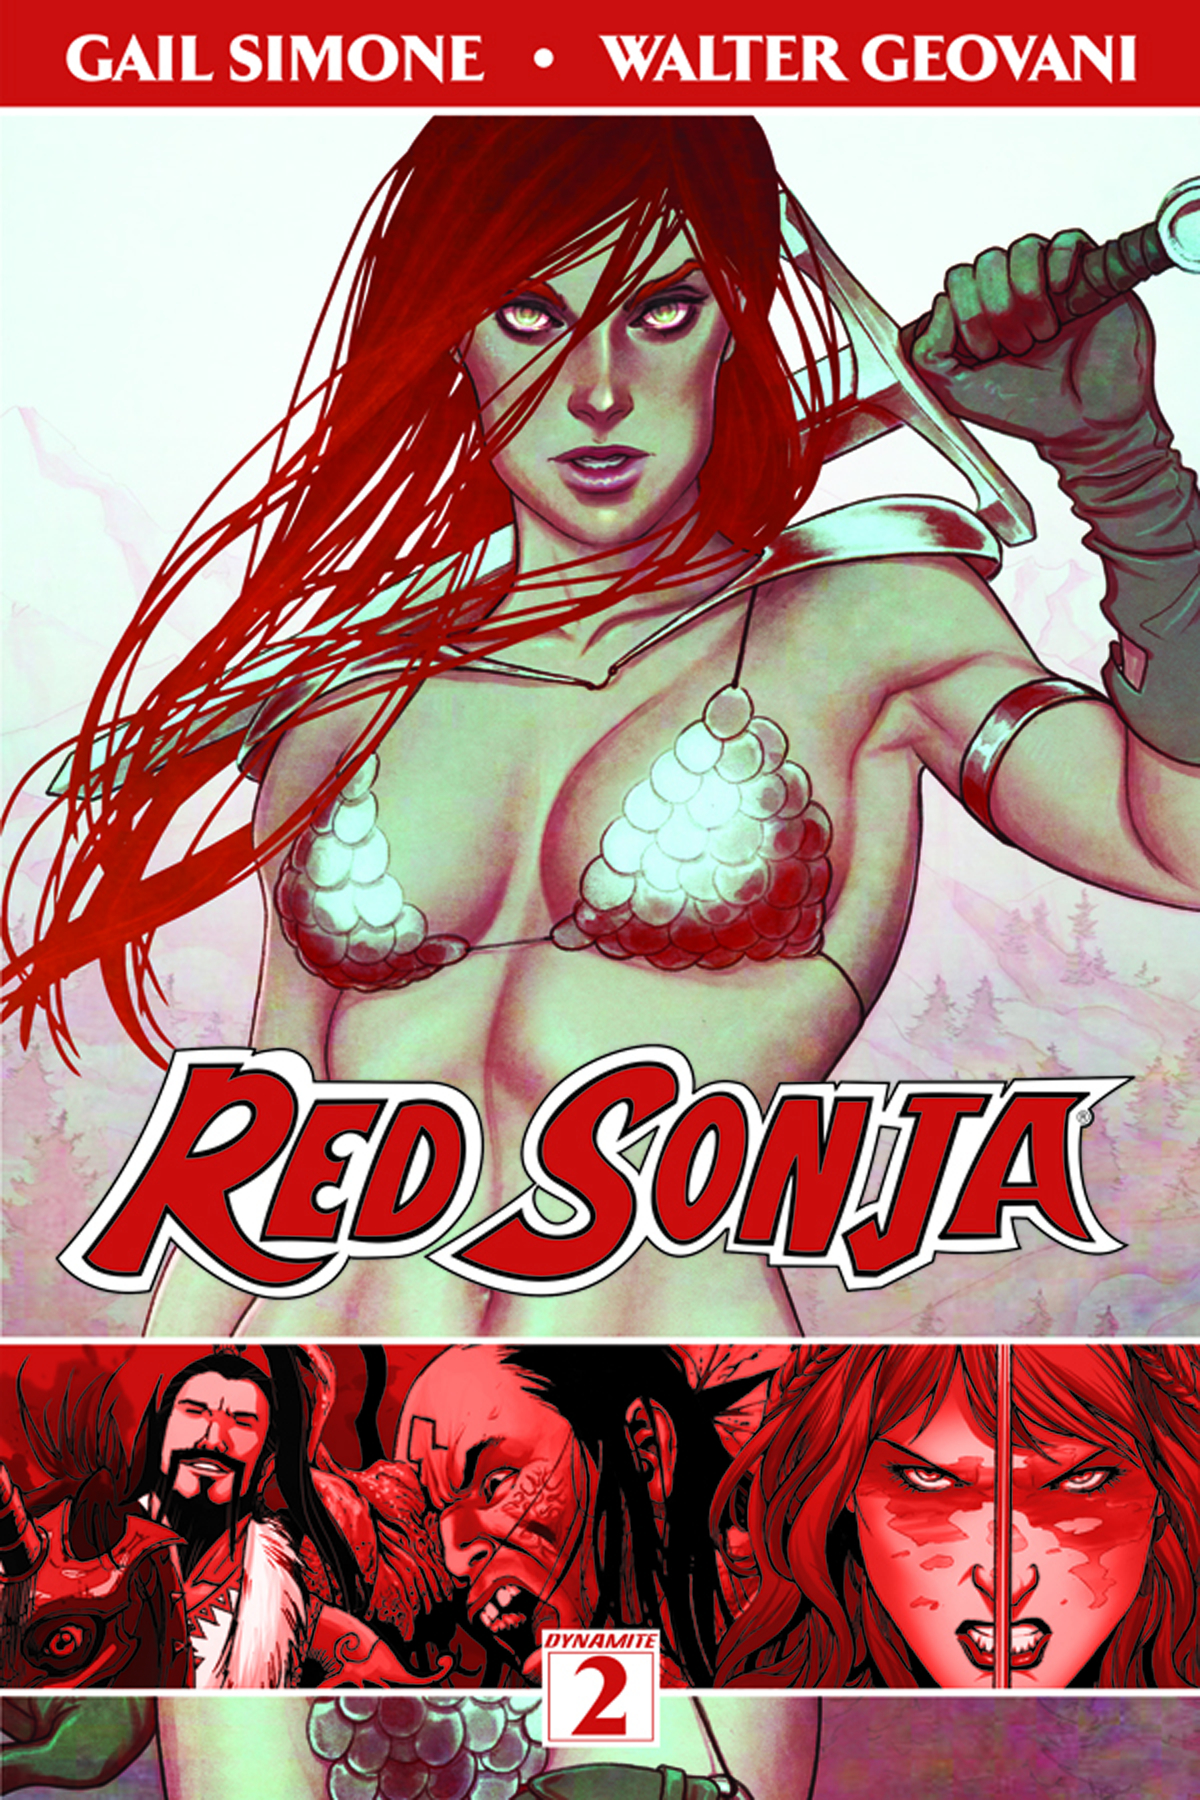 Red Sonja Gail Simone Graphic Novel Volume 2 Art Blood & Fire